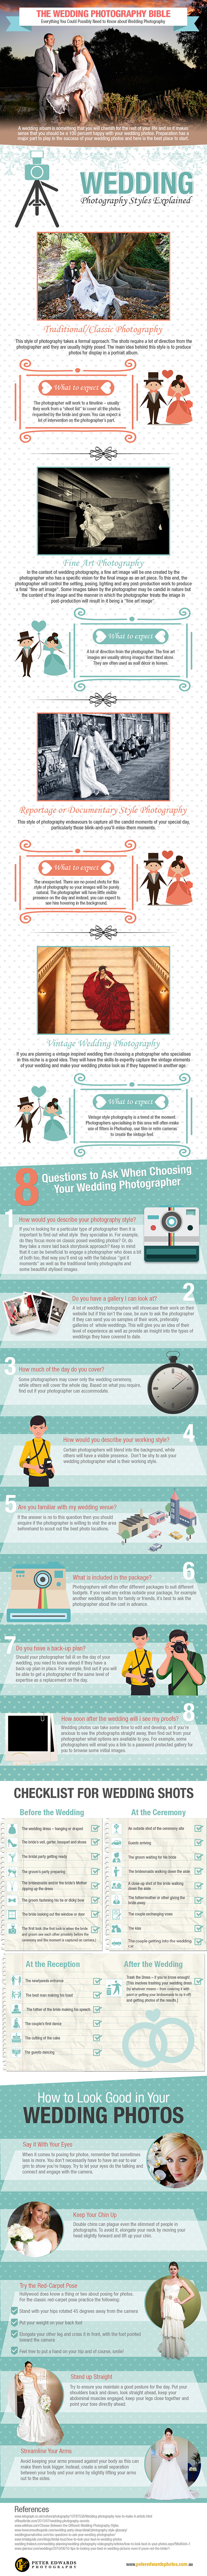 Wedding-photography-Bible-Infographic-1